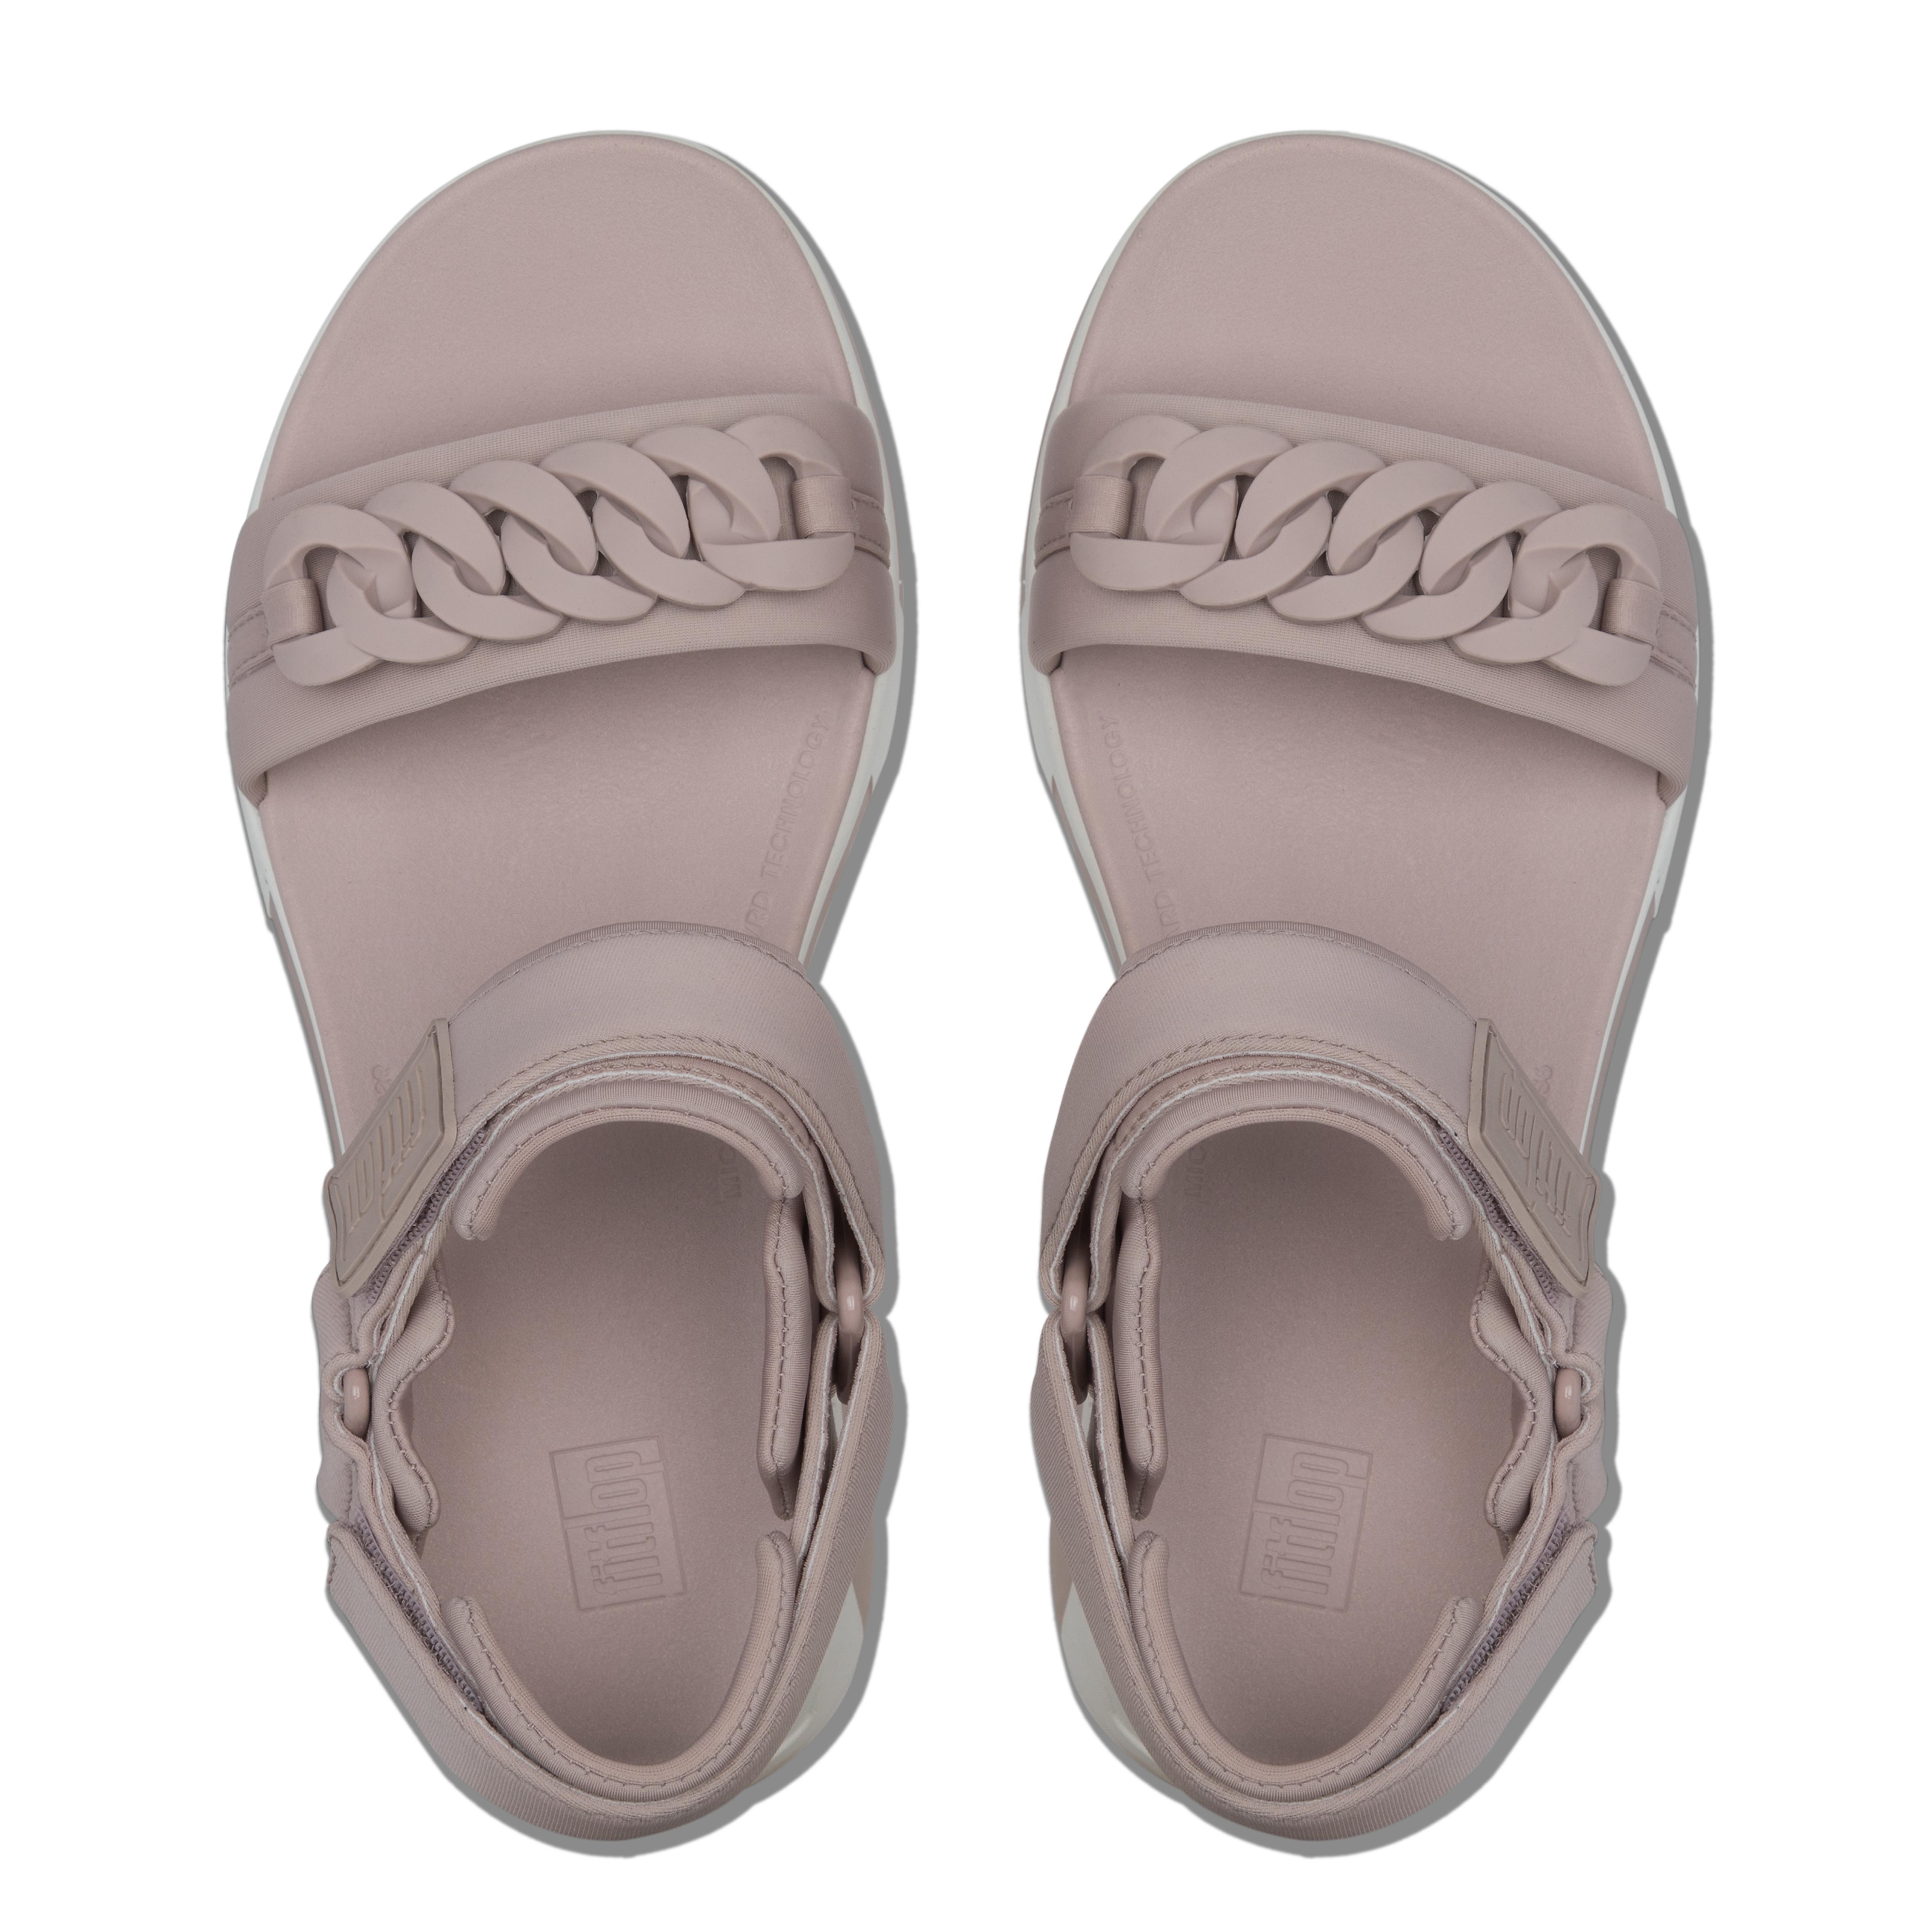 flip flop sandals with backstrap